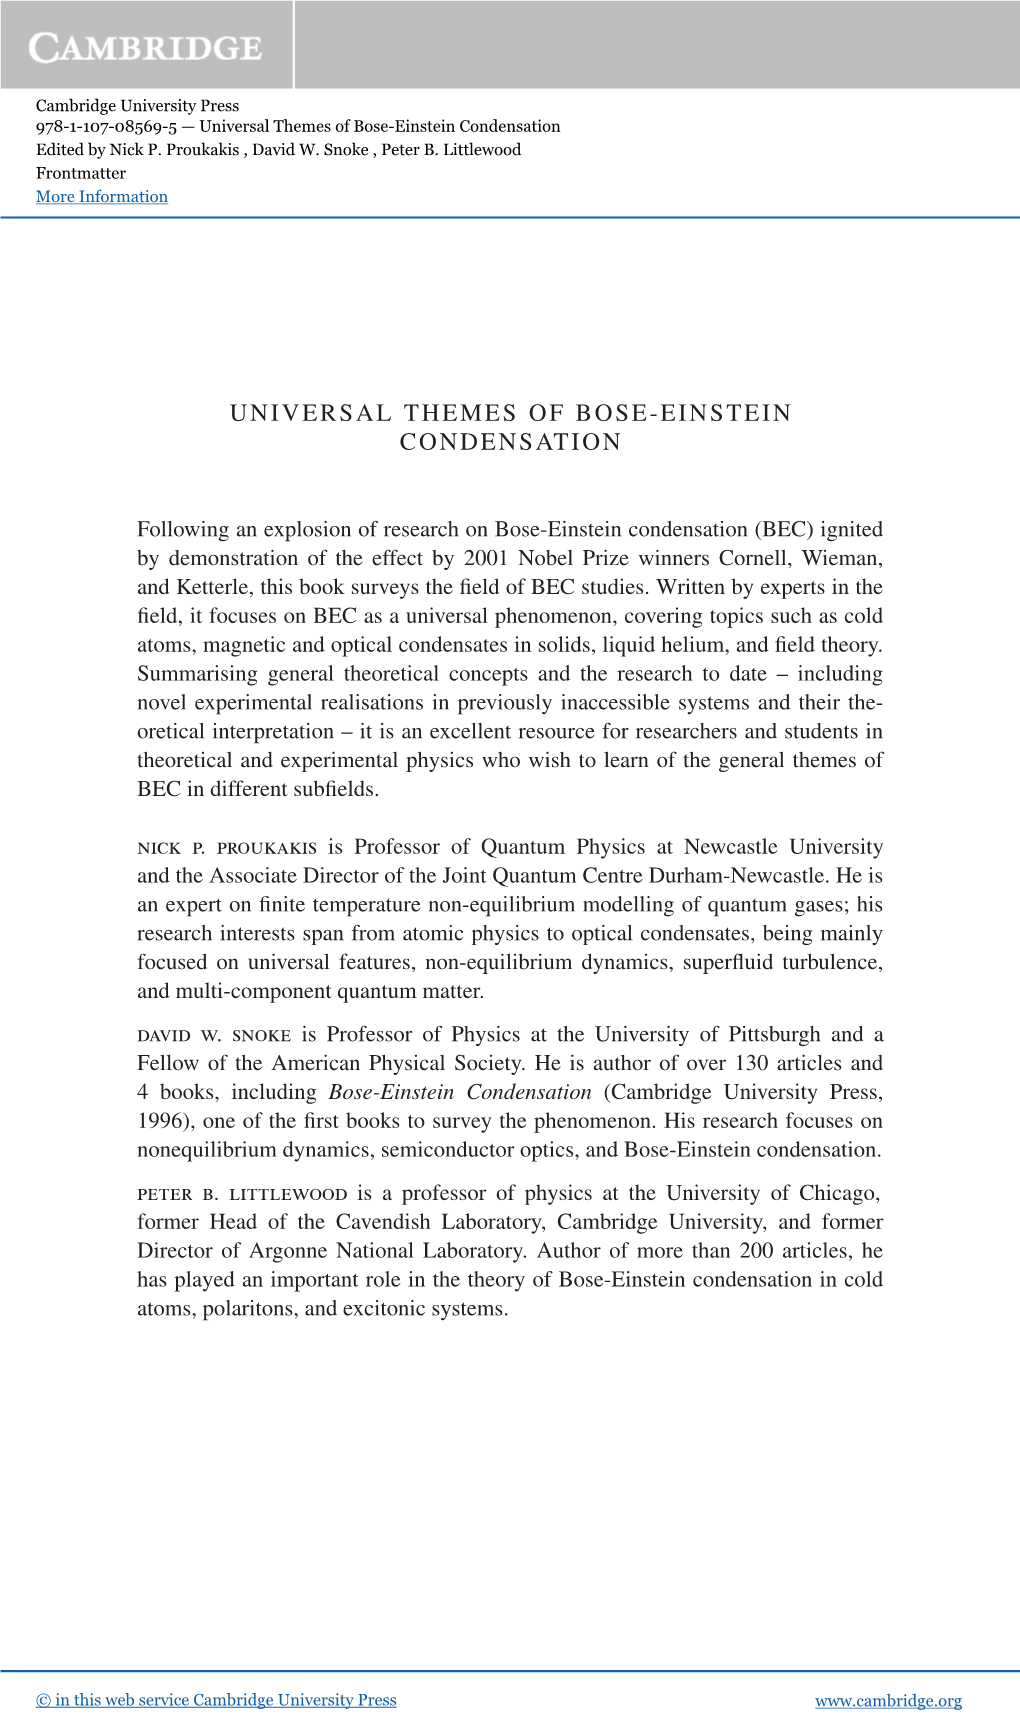 Universal Themes of Bose-Einstein Condensation Edited by Nick P